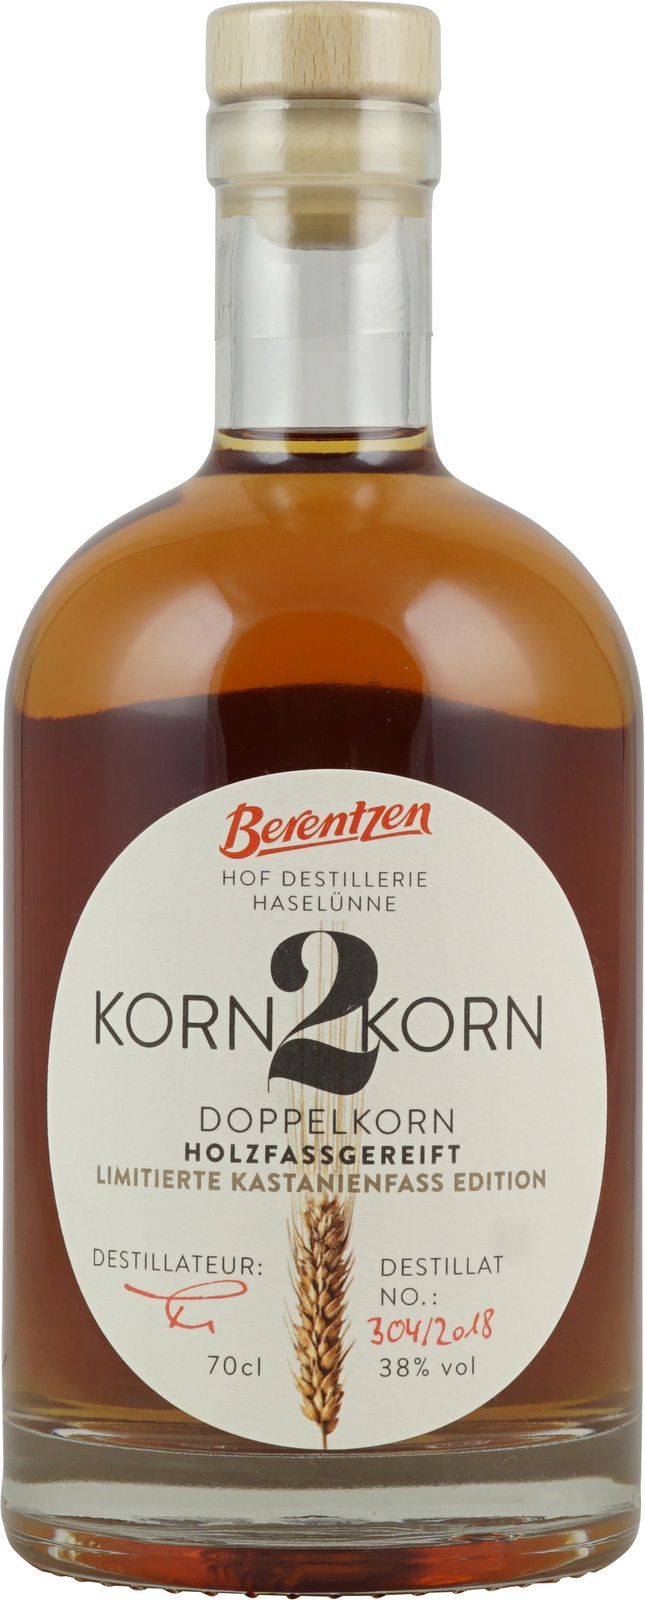 Vol., im 38 K Liter Korn2Korn Doppelkorn % Kastanie 0,7